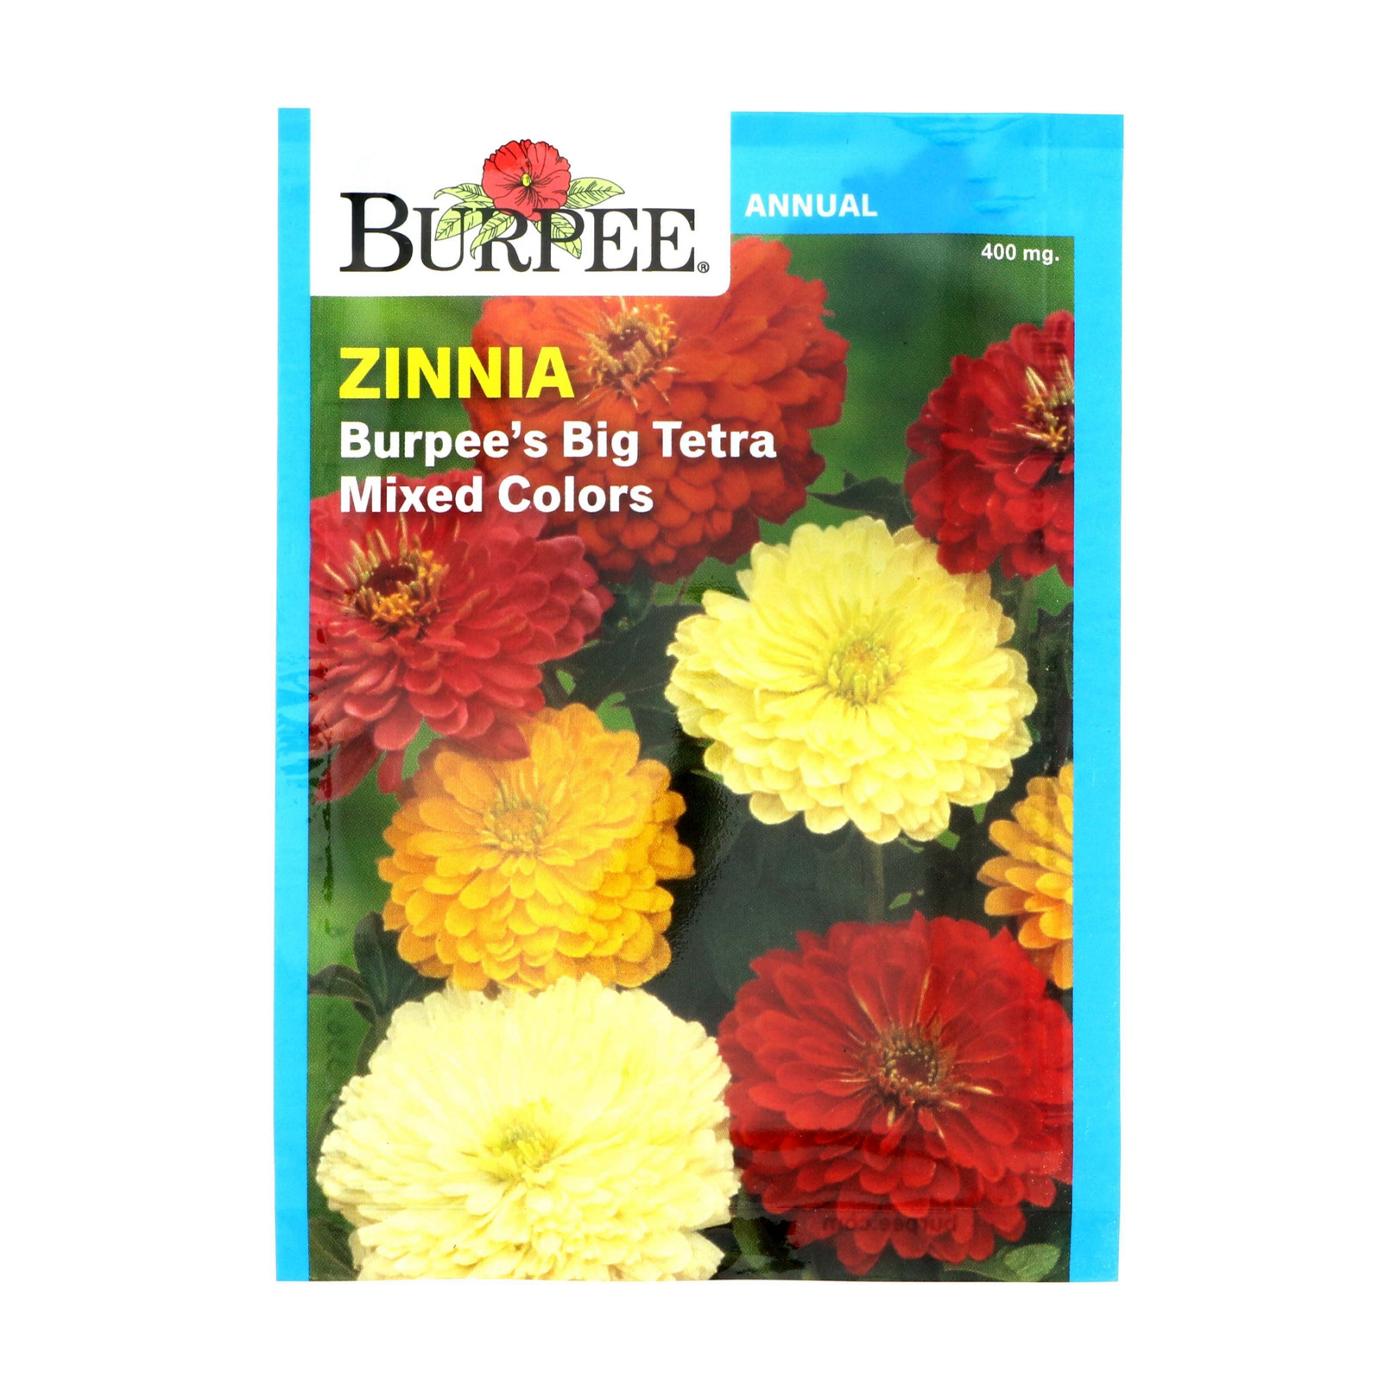 Burpee Big Tetra Mix Zinnia Annual Flower Seeds; image 1 of 2